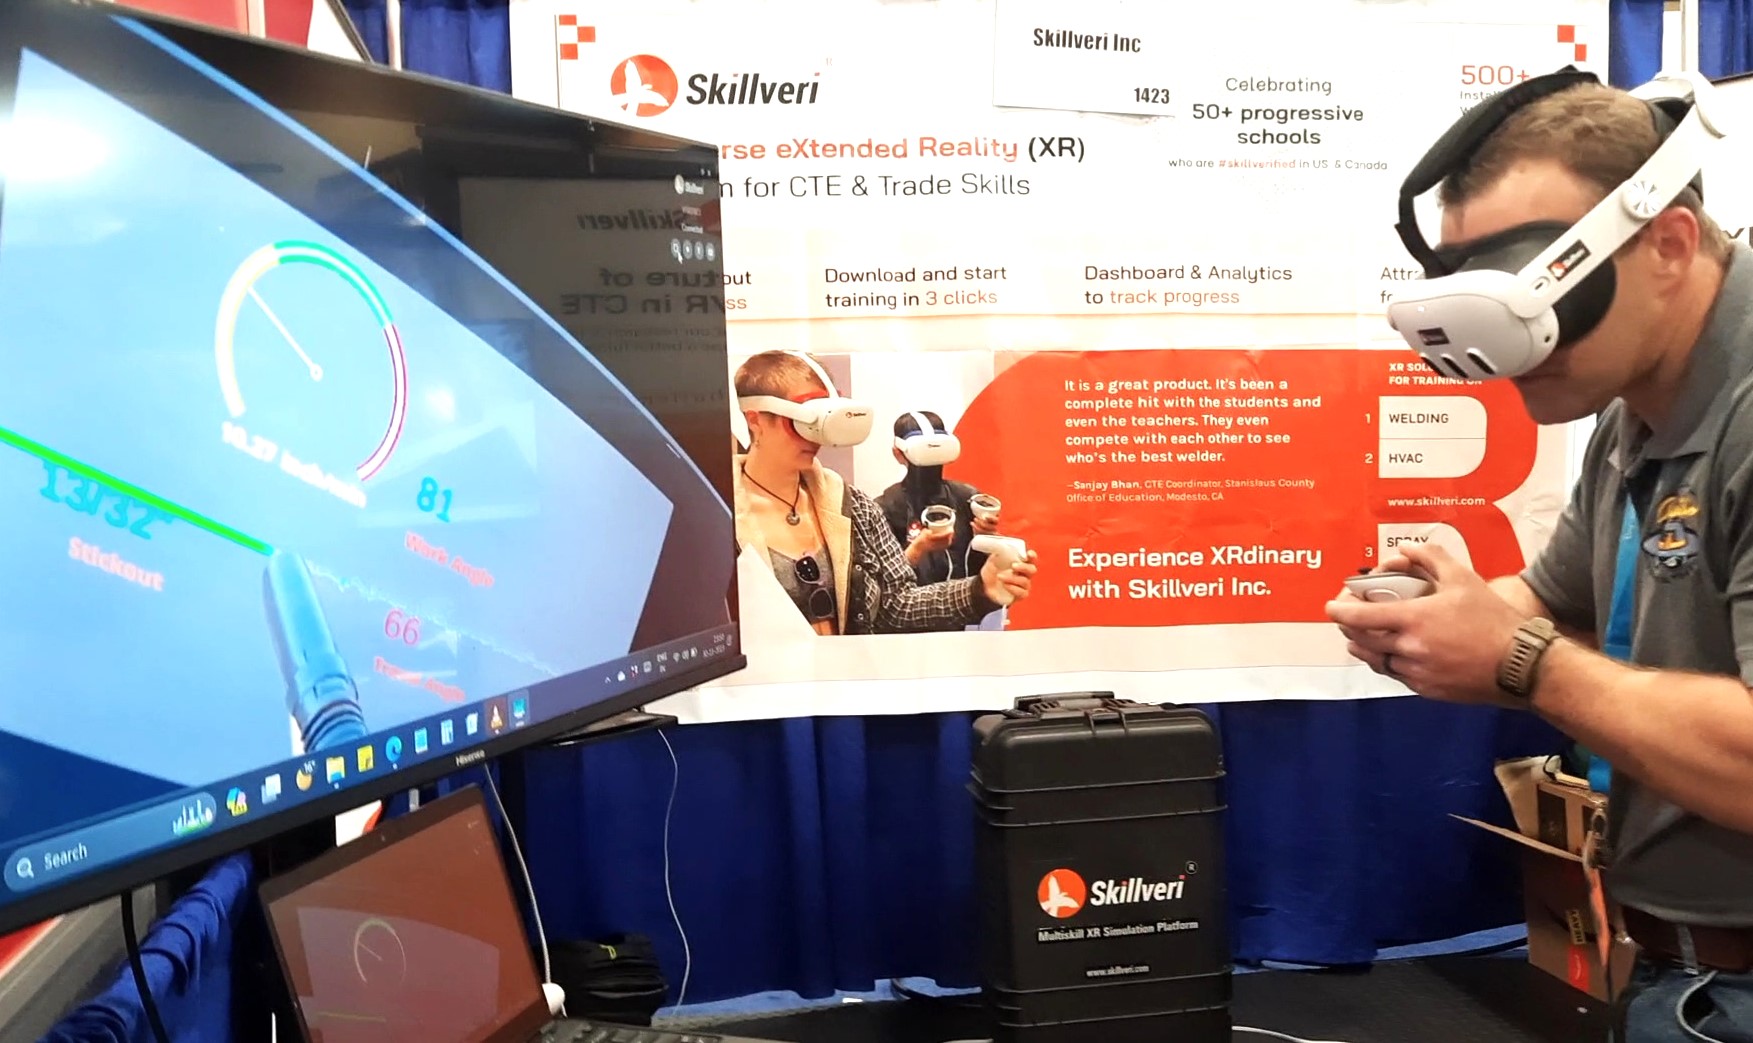 Skillveri VR welding simulators at ACTE USA